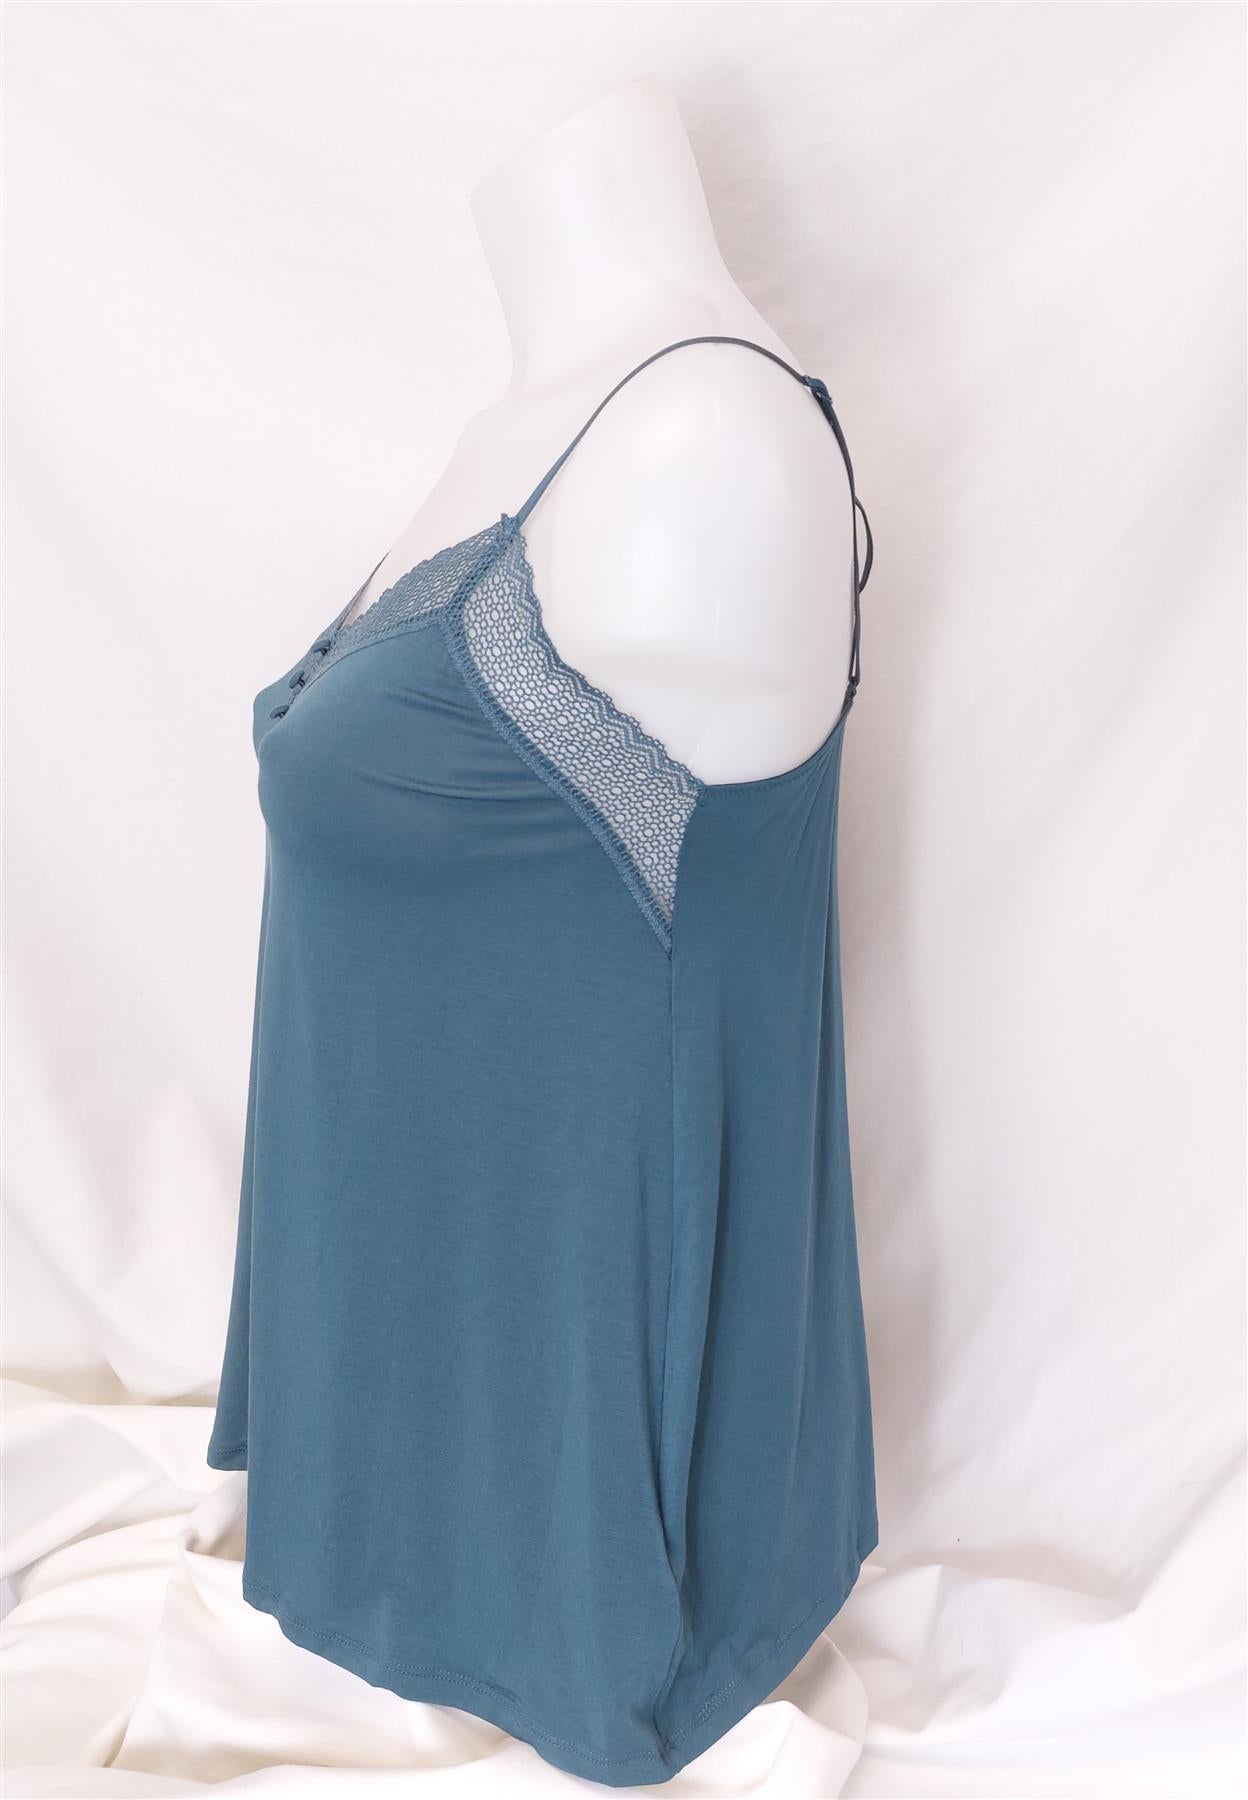 Designer Women's Camisole Top Cami Vest Lace Trim Supersoft Pyjama Nightshirt